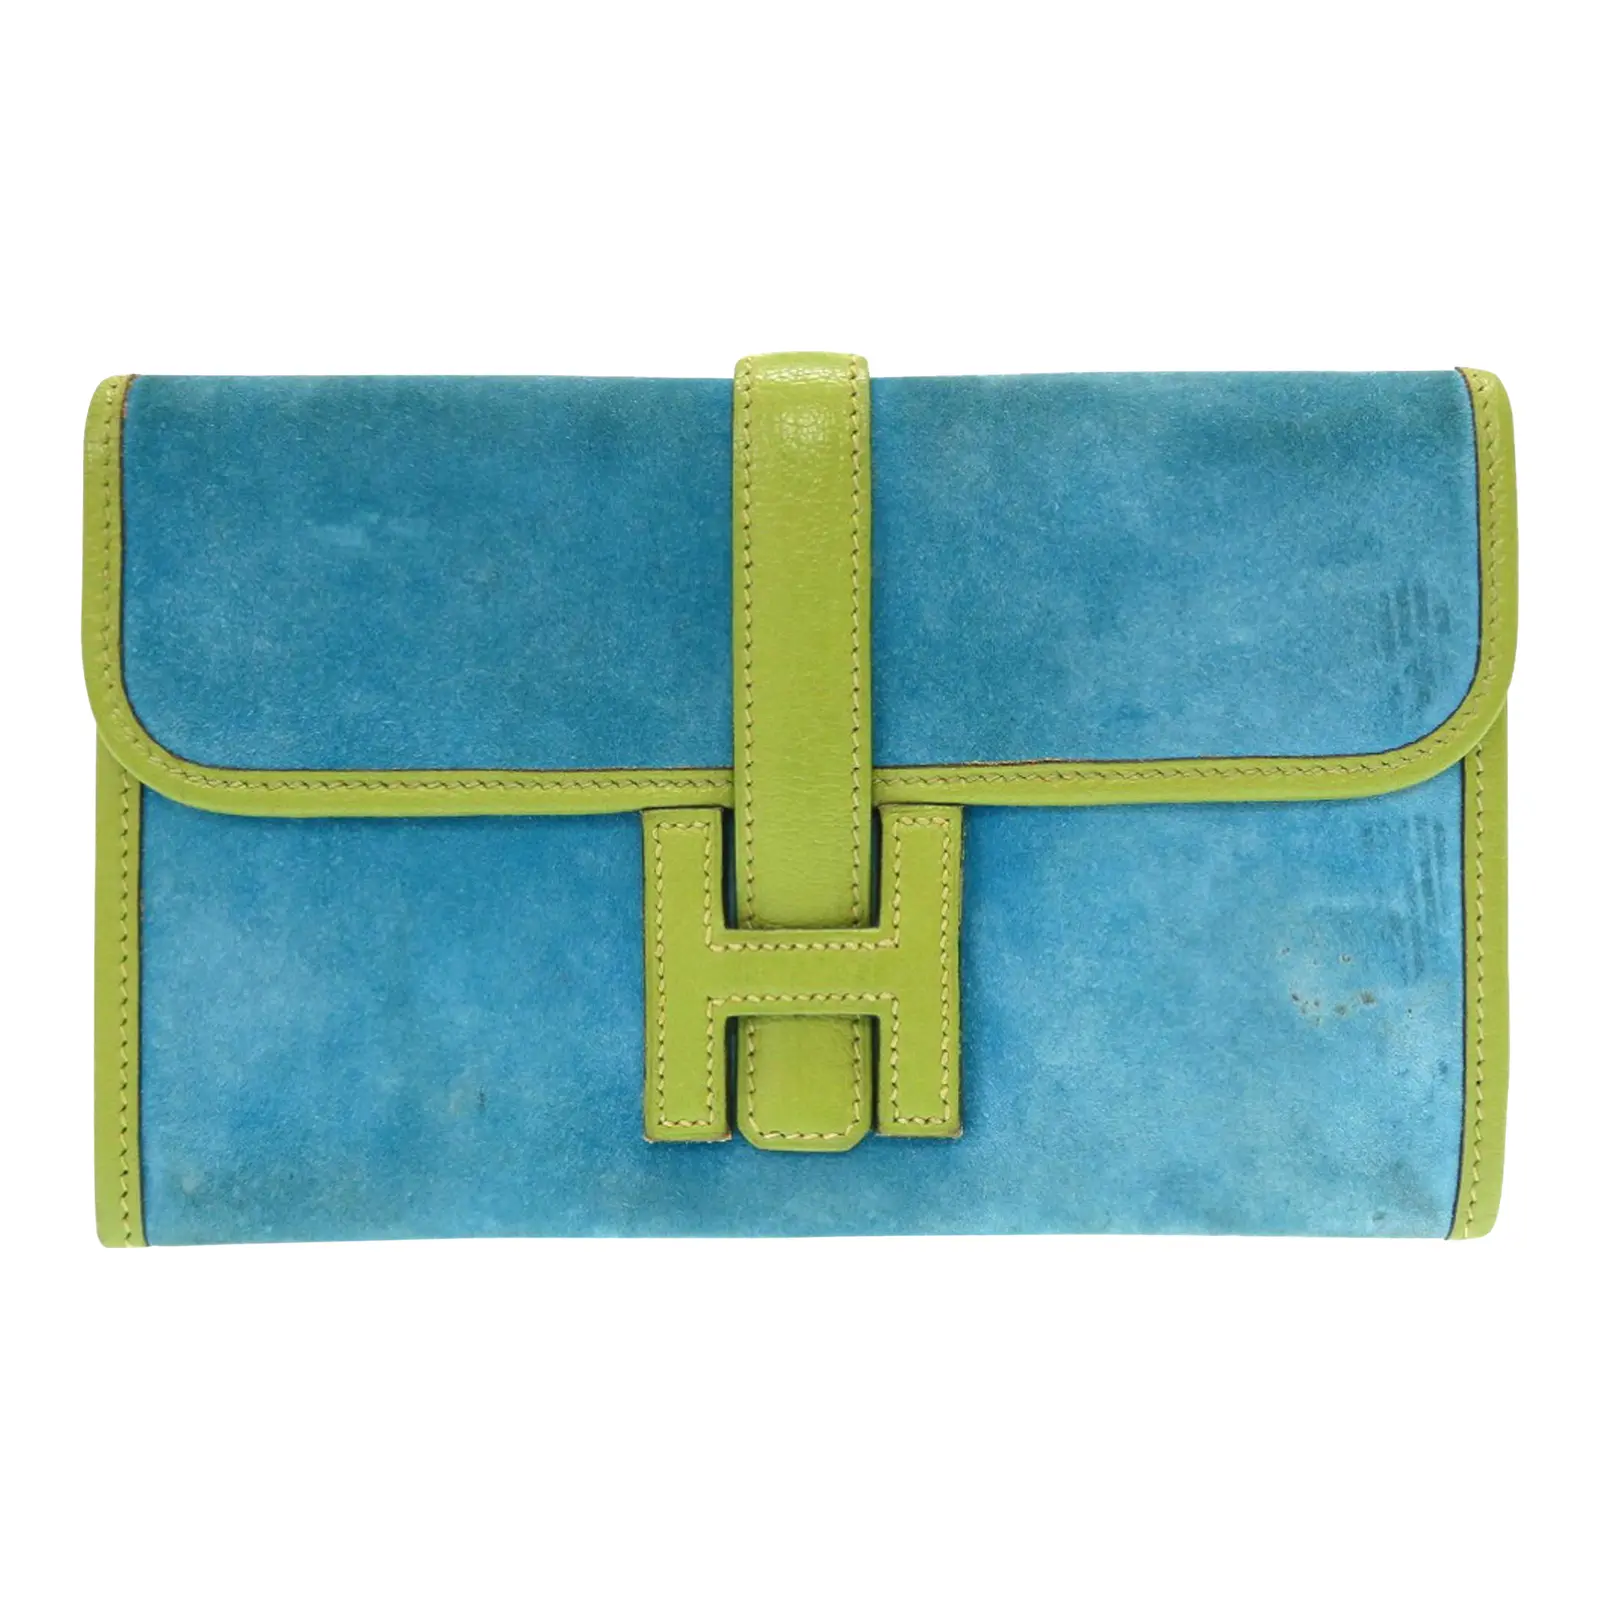 hermes-jige-mini-dobris-chevre-anis-green-turquoise-j-engraved-clutch-bag-bicolor-blue-0057-0585.png